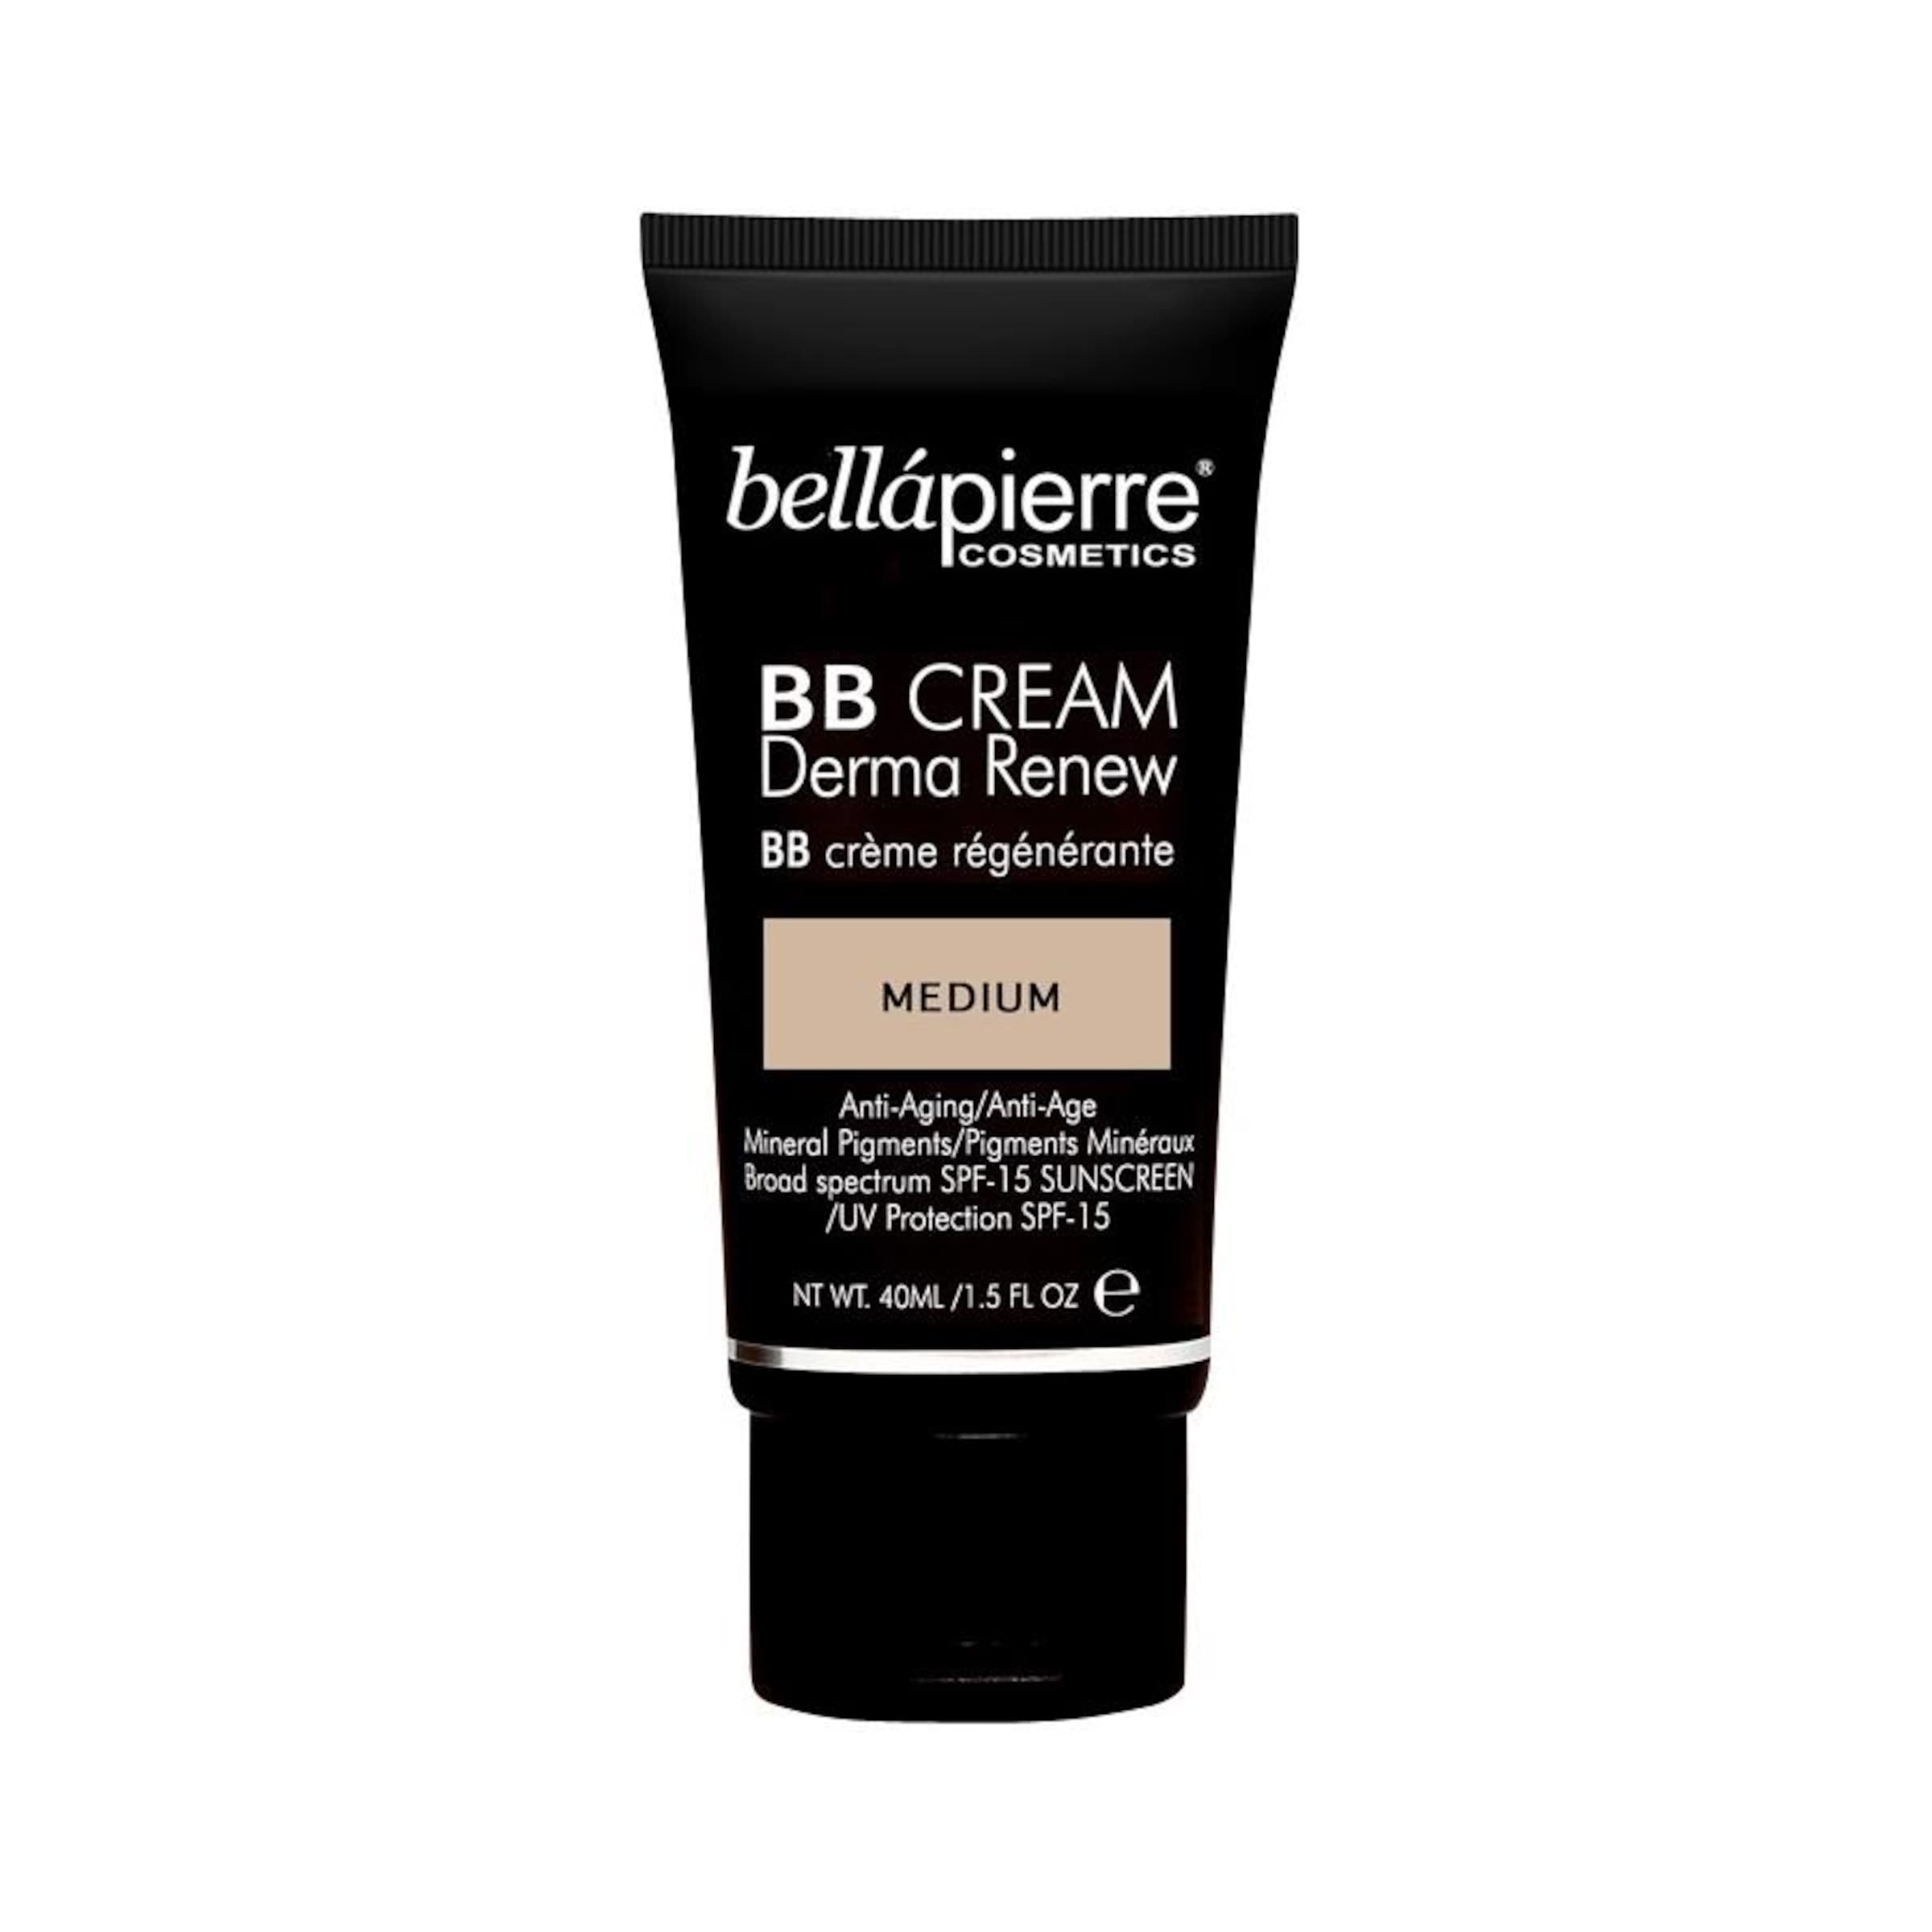 Bellápierre Cosmetics BB Cream Derma Renew in 